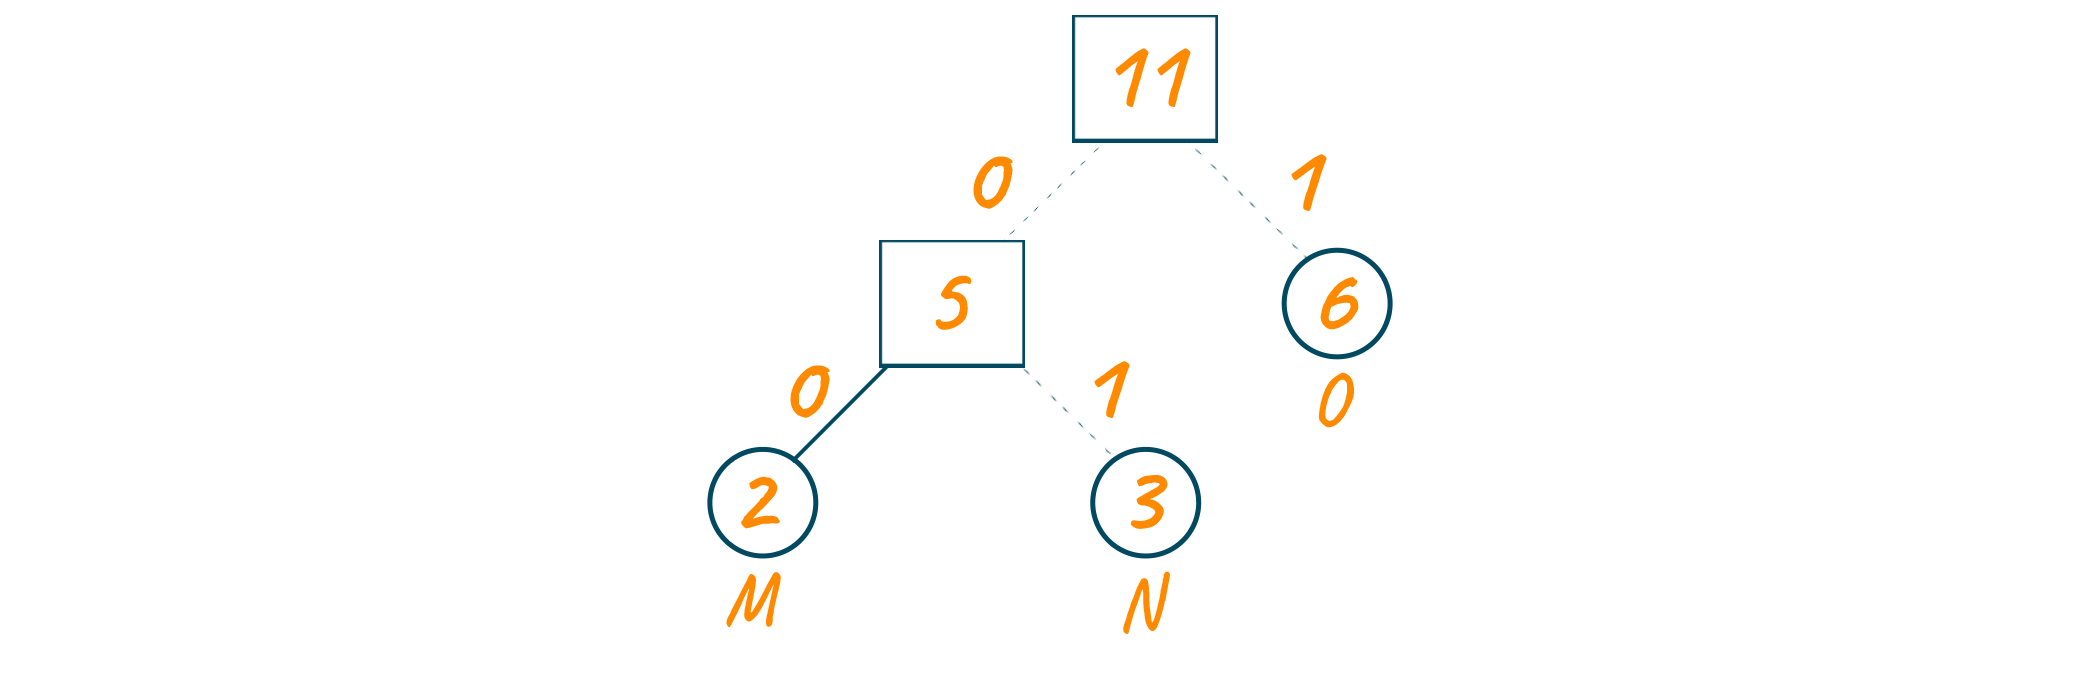 Huffman decoding example